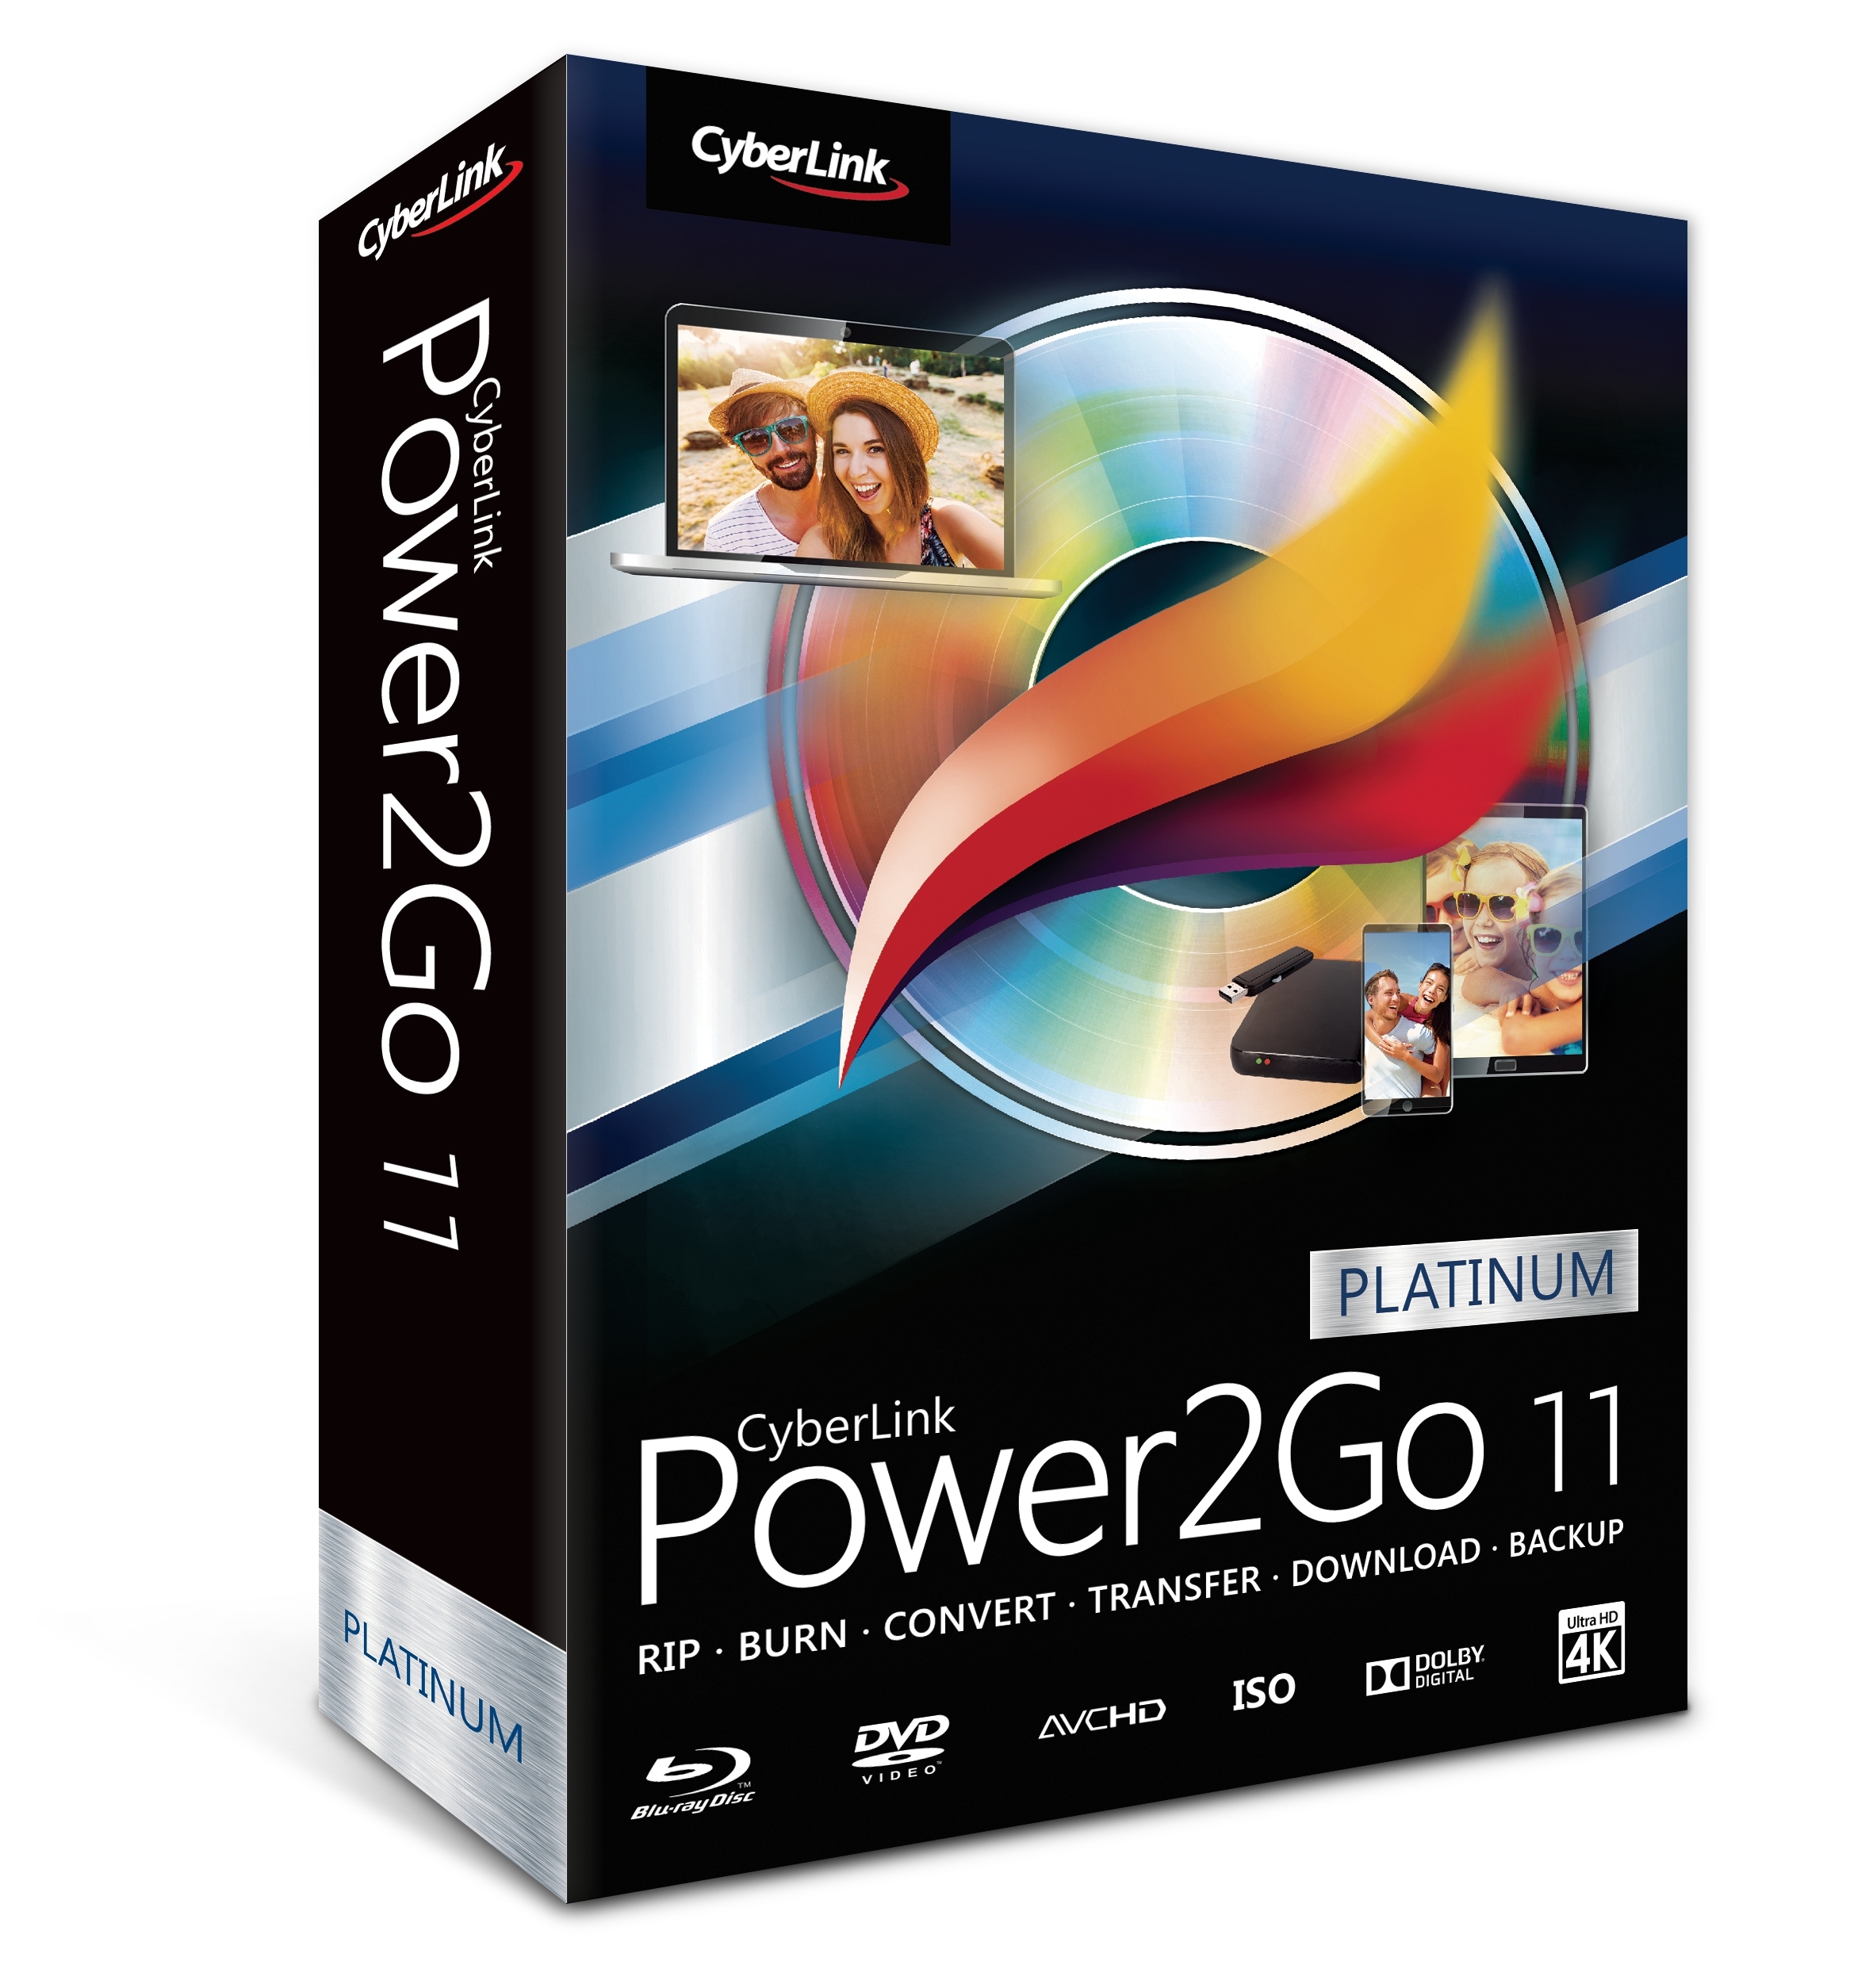 Cyberlink Power2go 10 free. download full Version